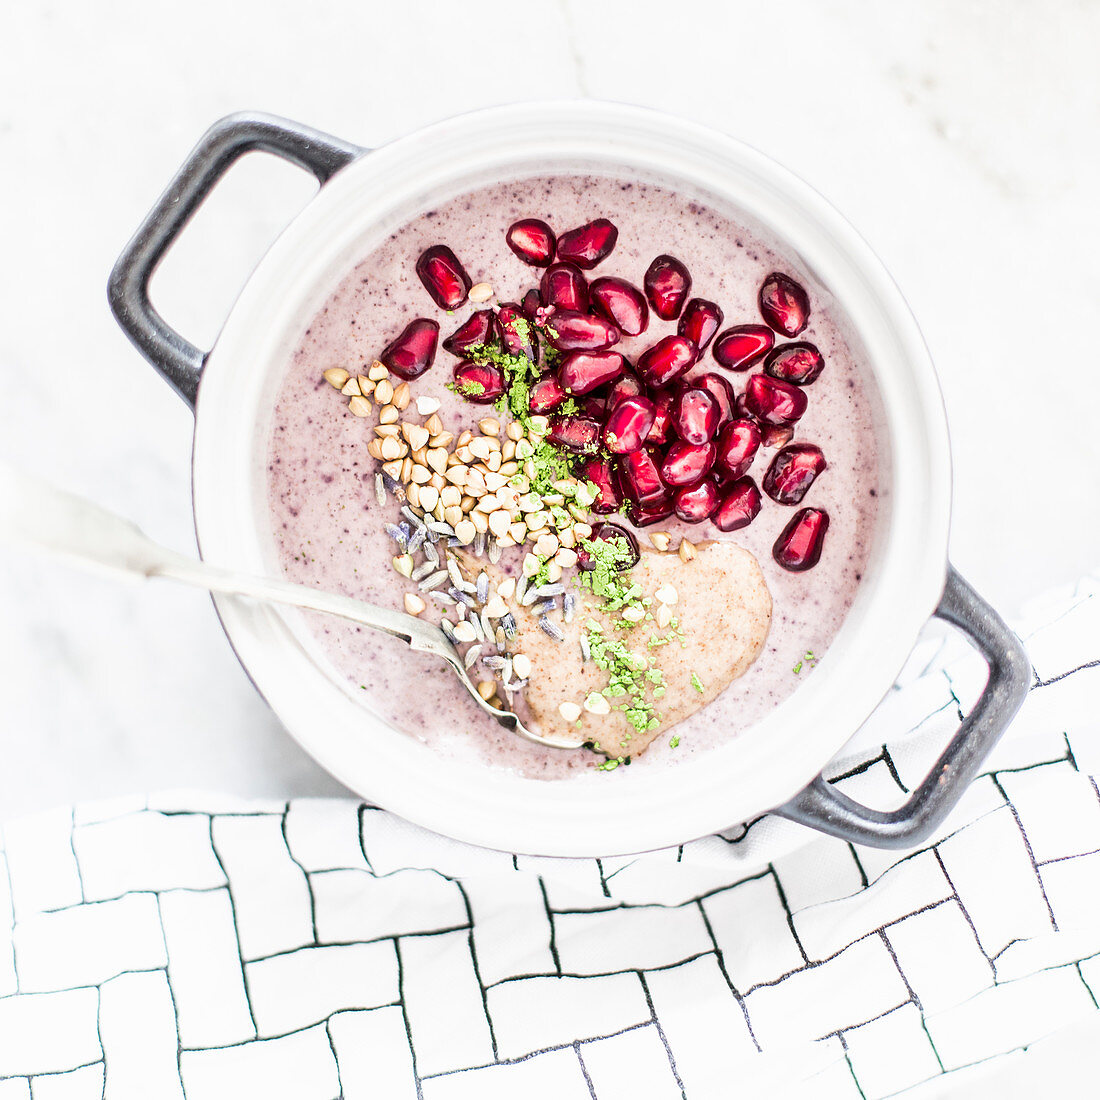 Buckwheat porridge with acai berries, pomegranate, matcha, lavender and almond mousse